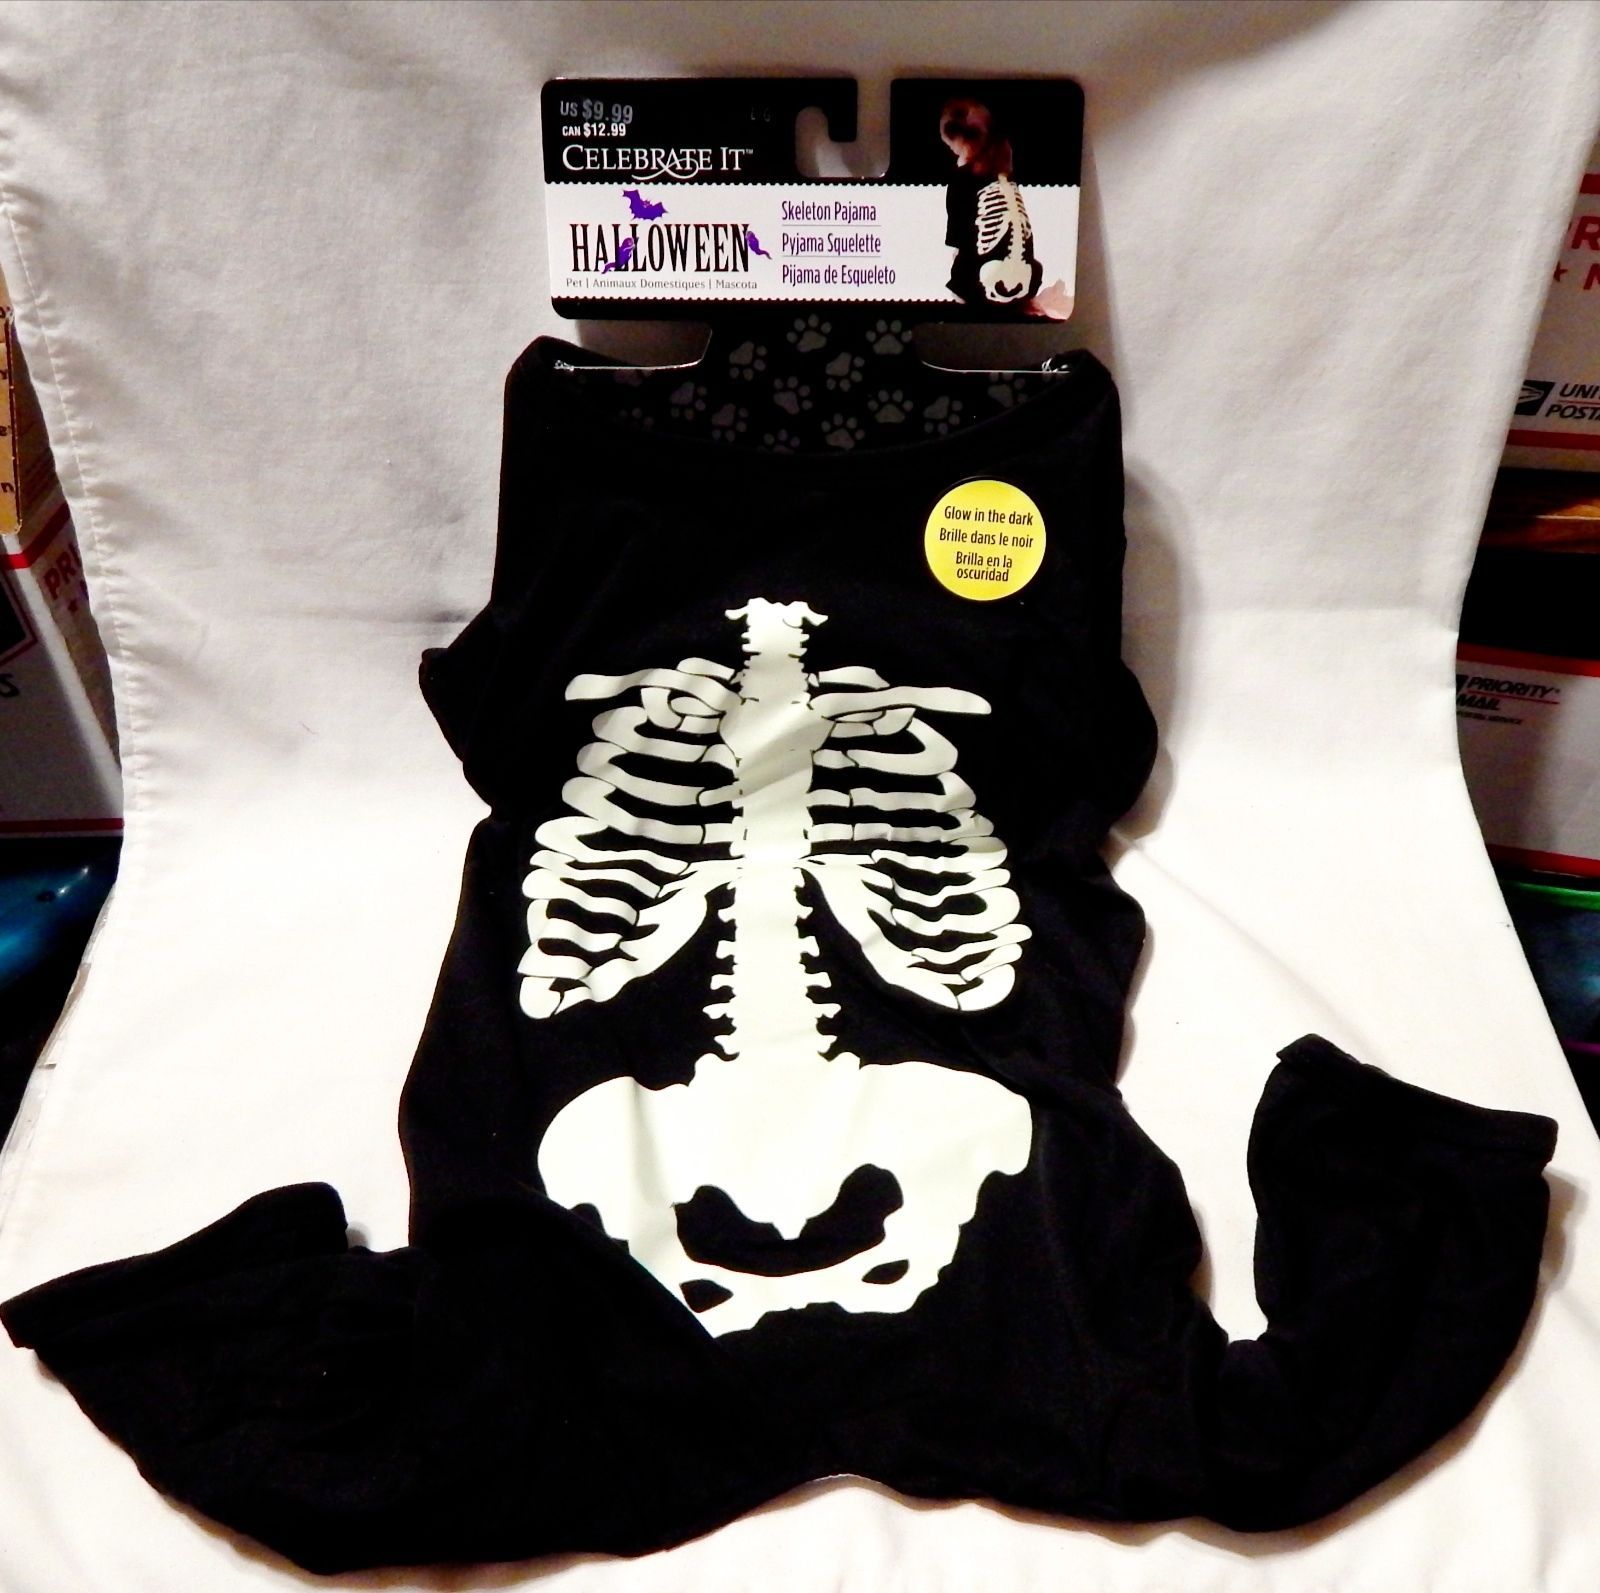 Halloween Dog Pet Costume Celebrate It Lg Skeleton Pajama Glow in the Dark 38R - $7.89